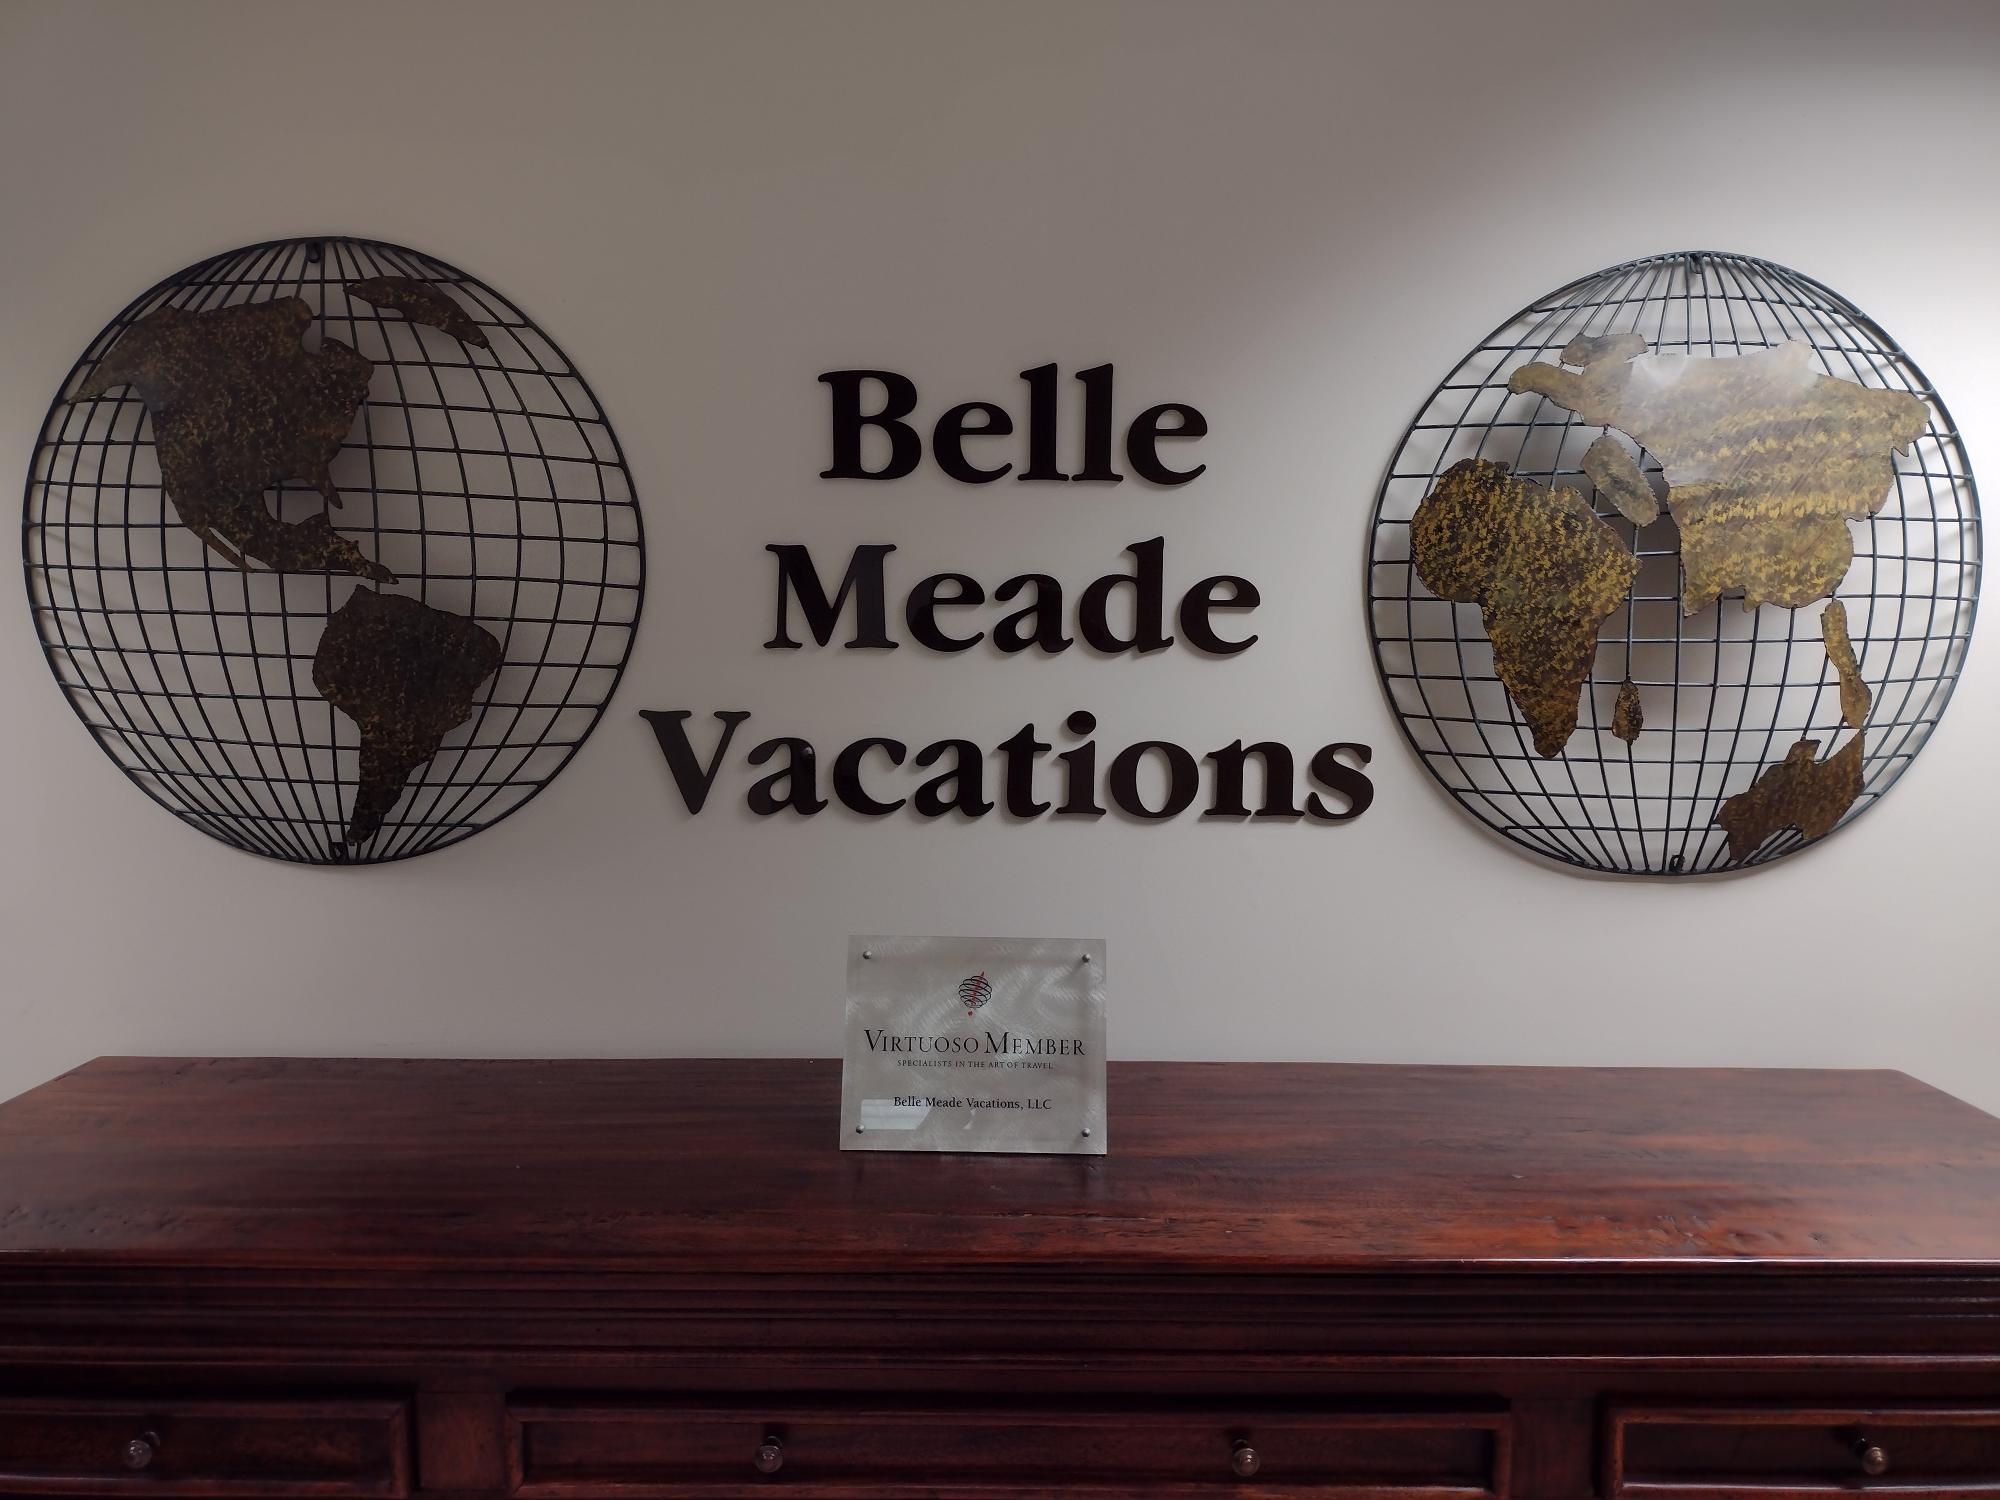 Belle Meade Vacations Office in Nashville, TN